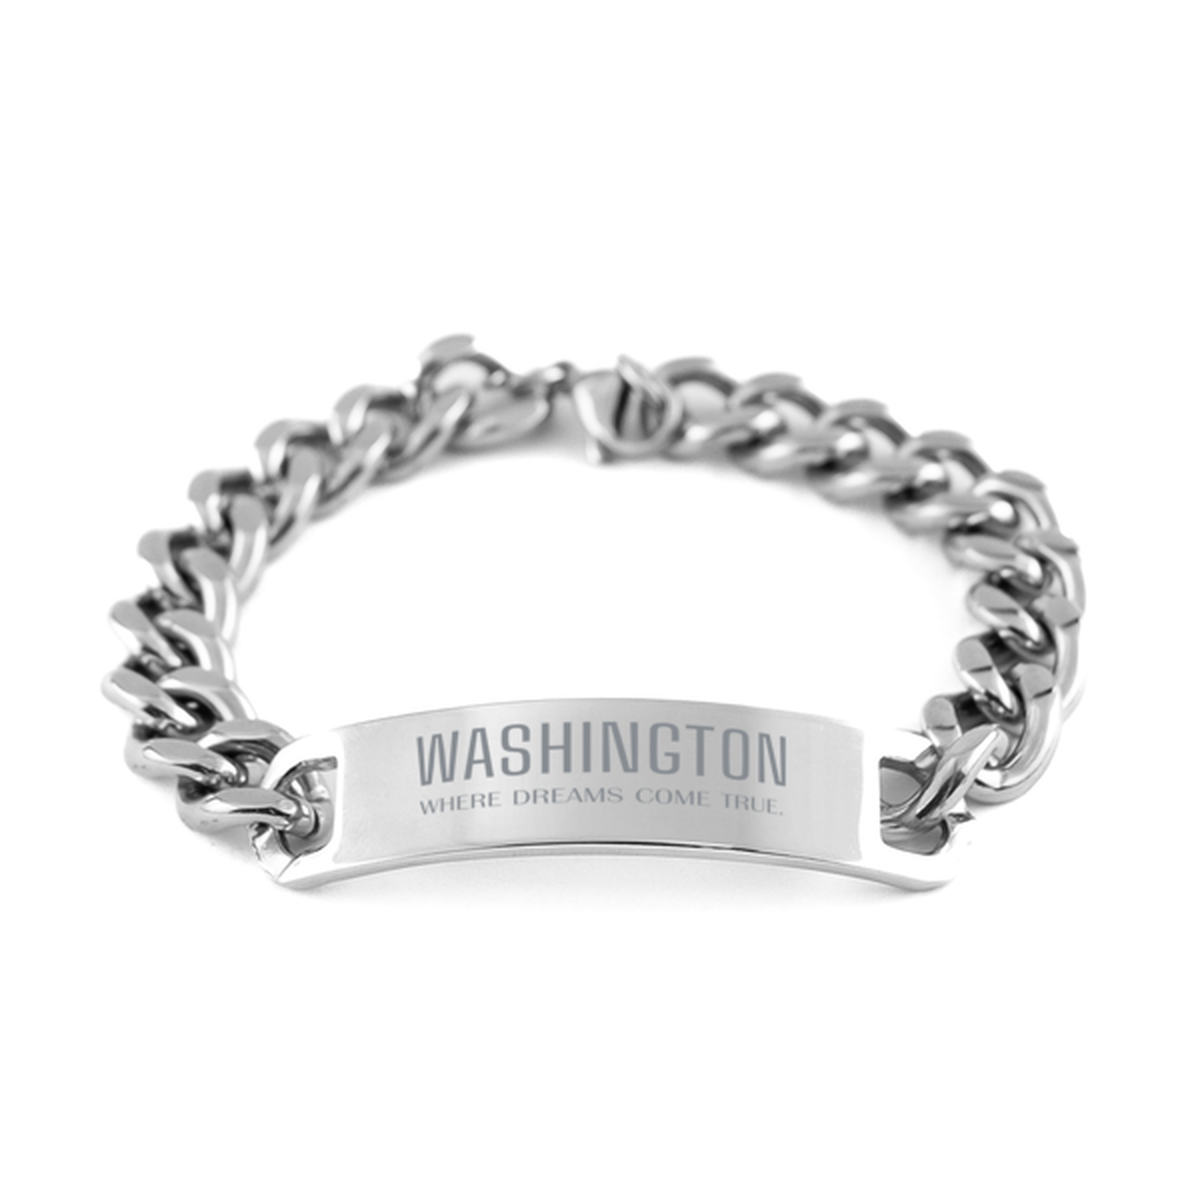 Love Washington State Cuban Chain Stainless Steel Bracelet, Washington Where dreams come true, Birthday Inspirational Gifts For Washington Men, Women, Friends